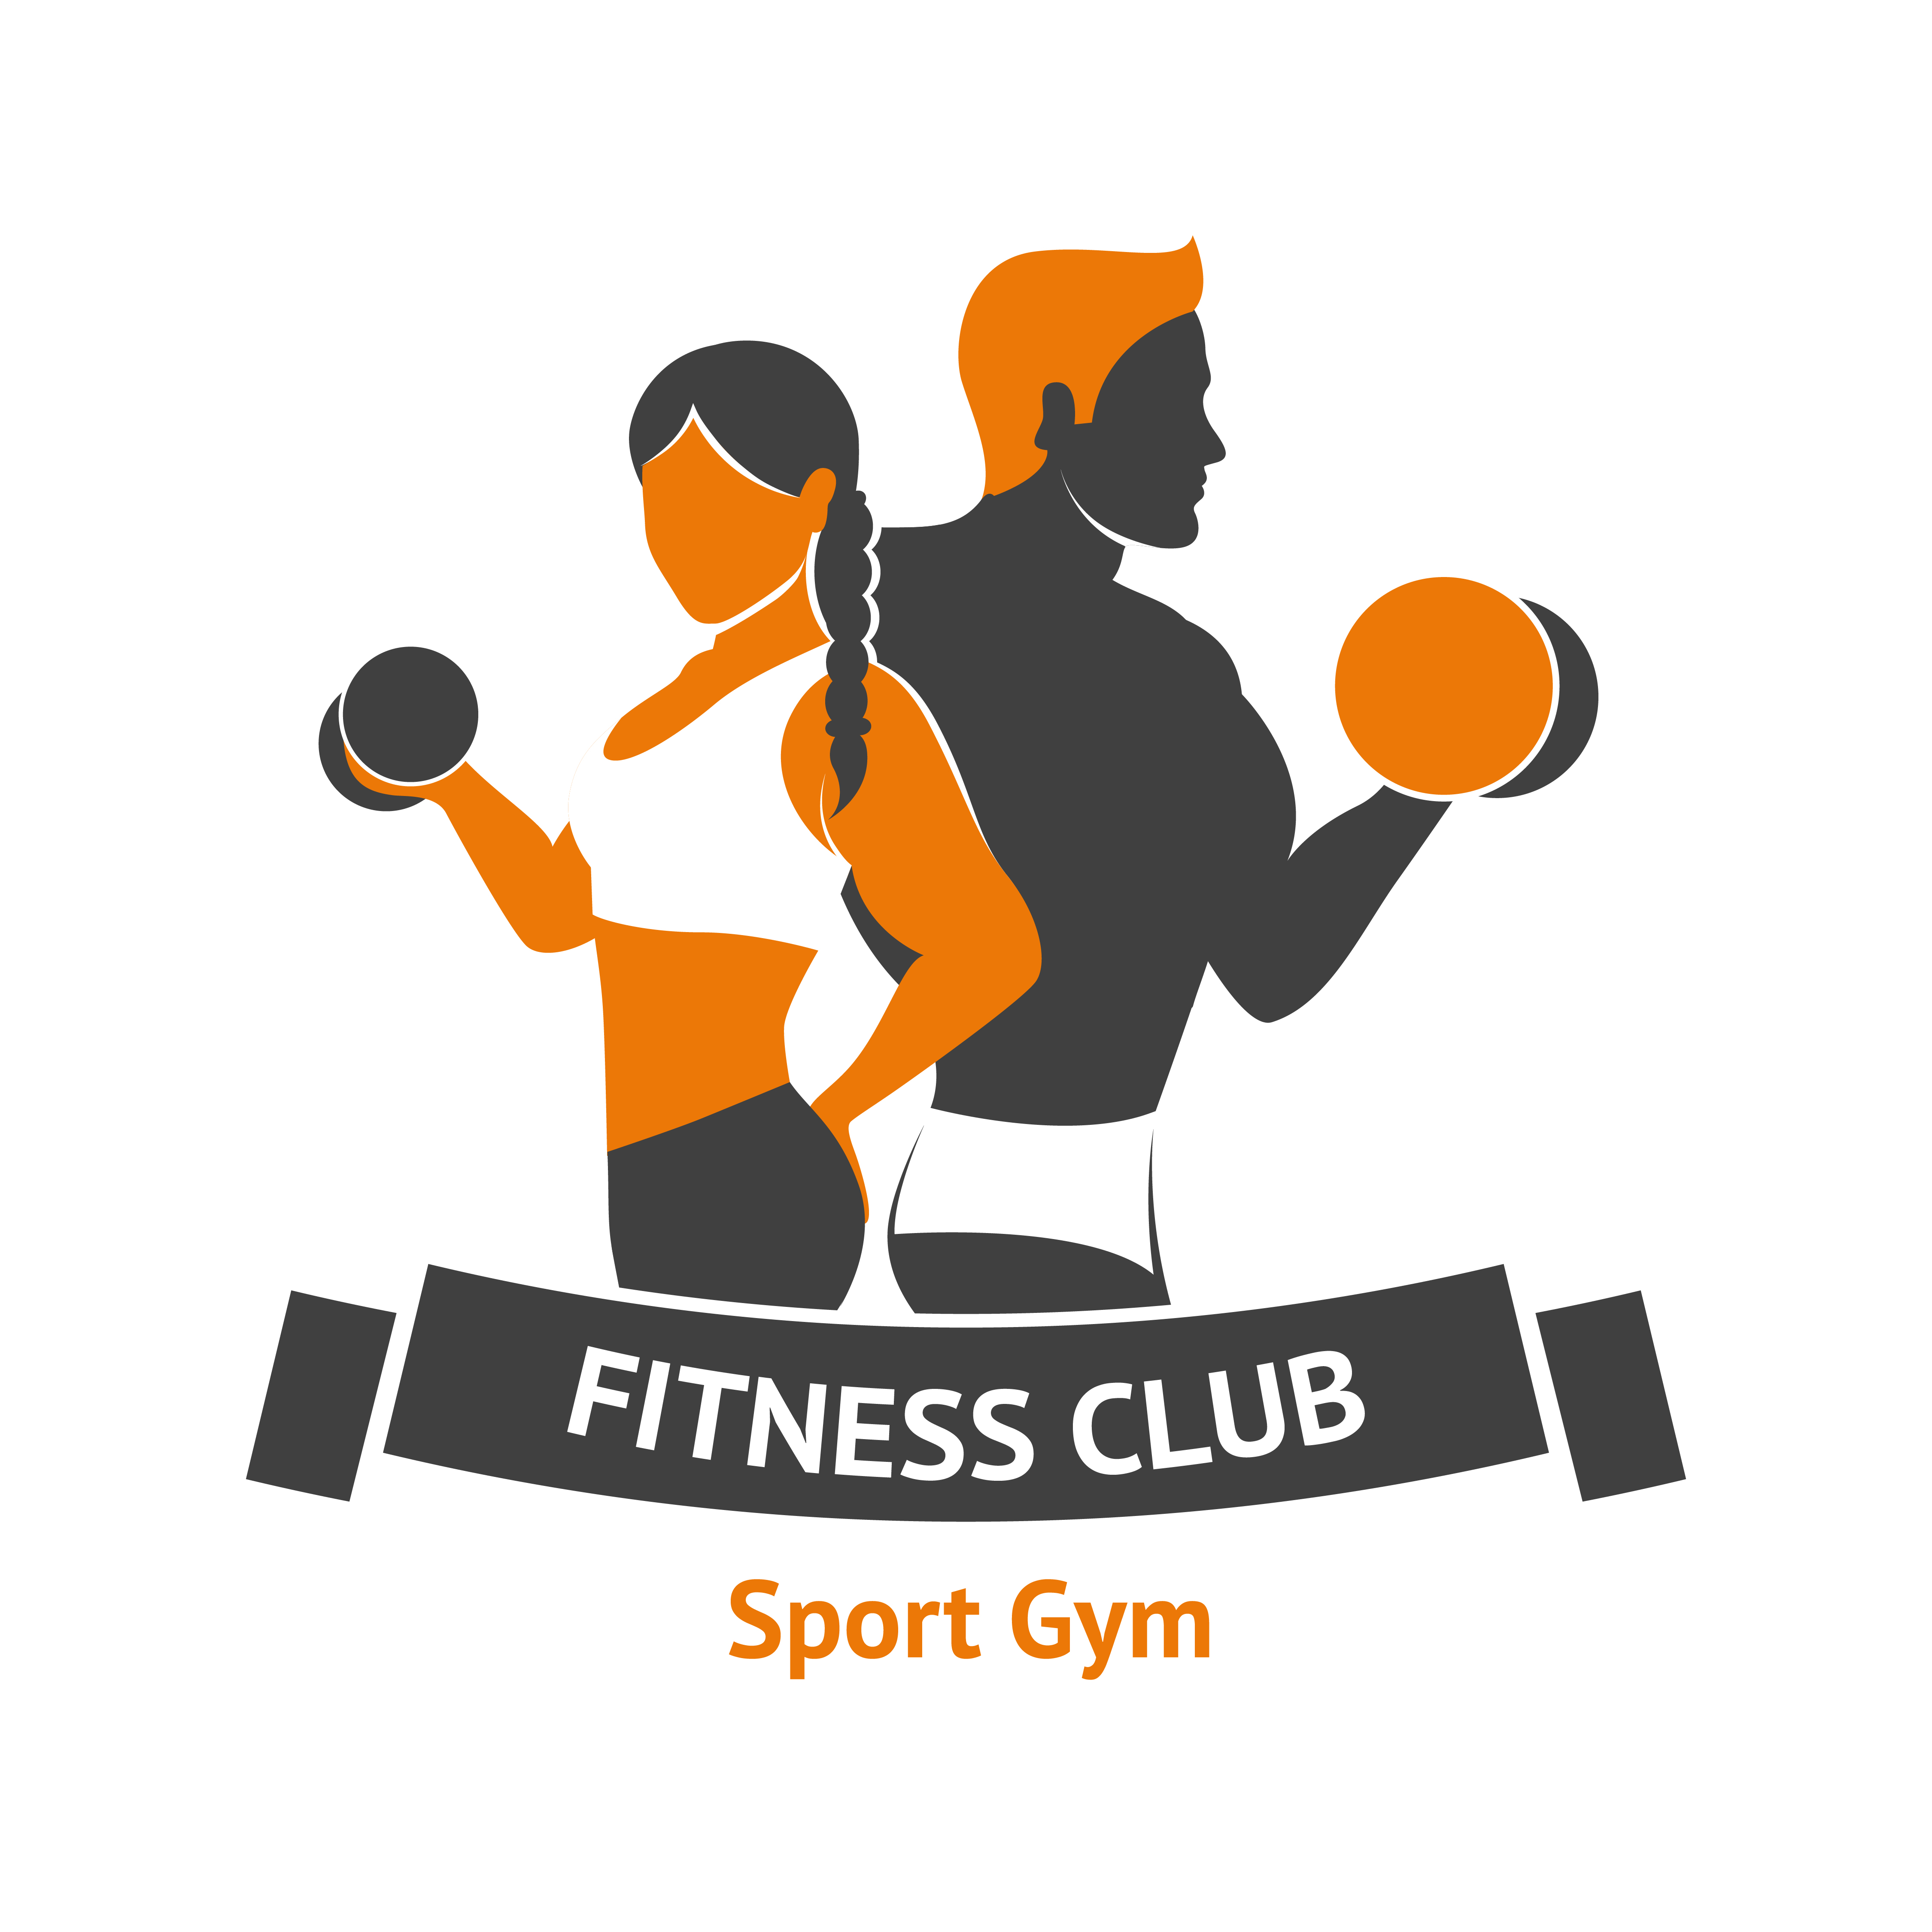 Gym Logos Fitness